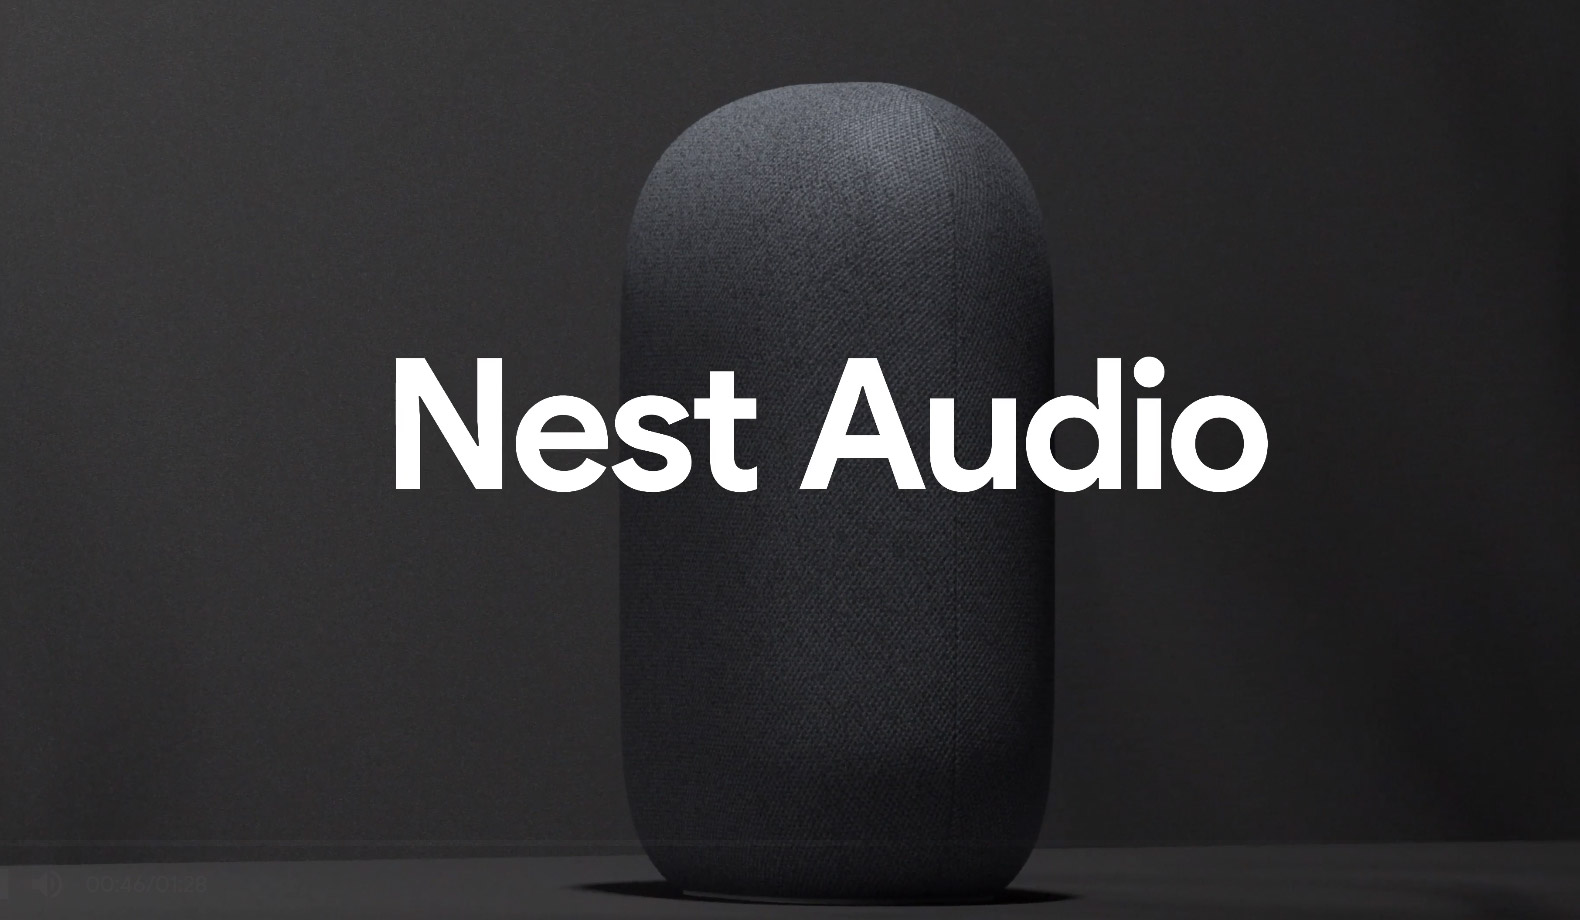 Google Nest Audio